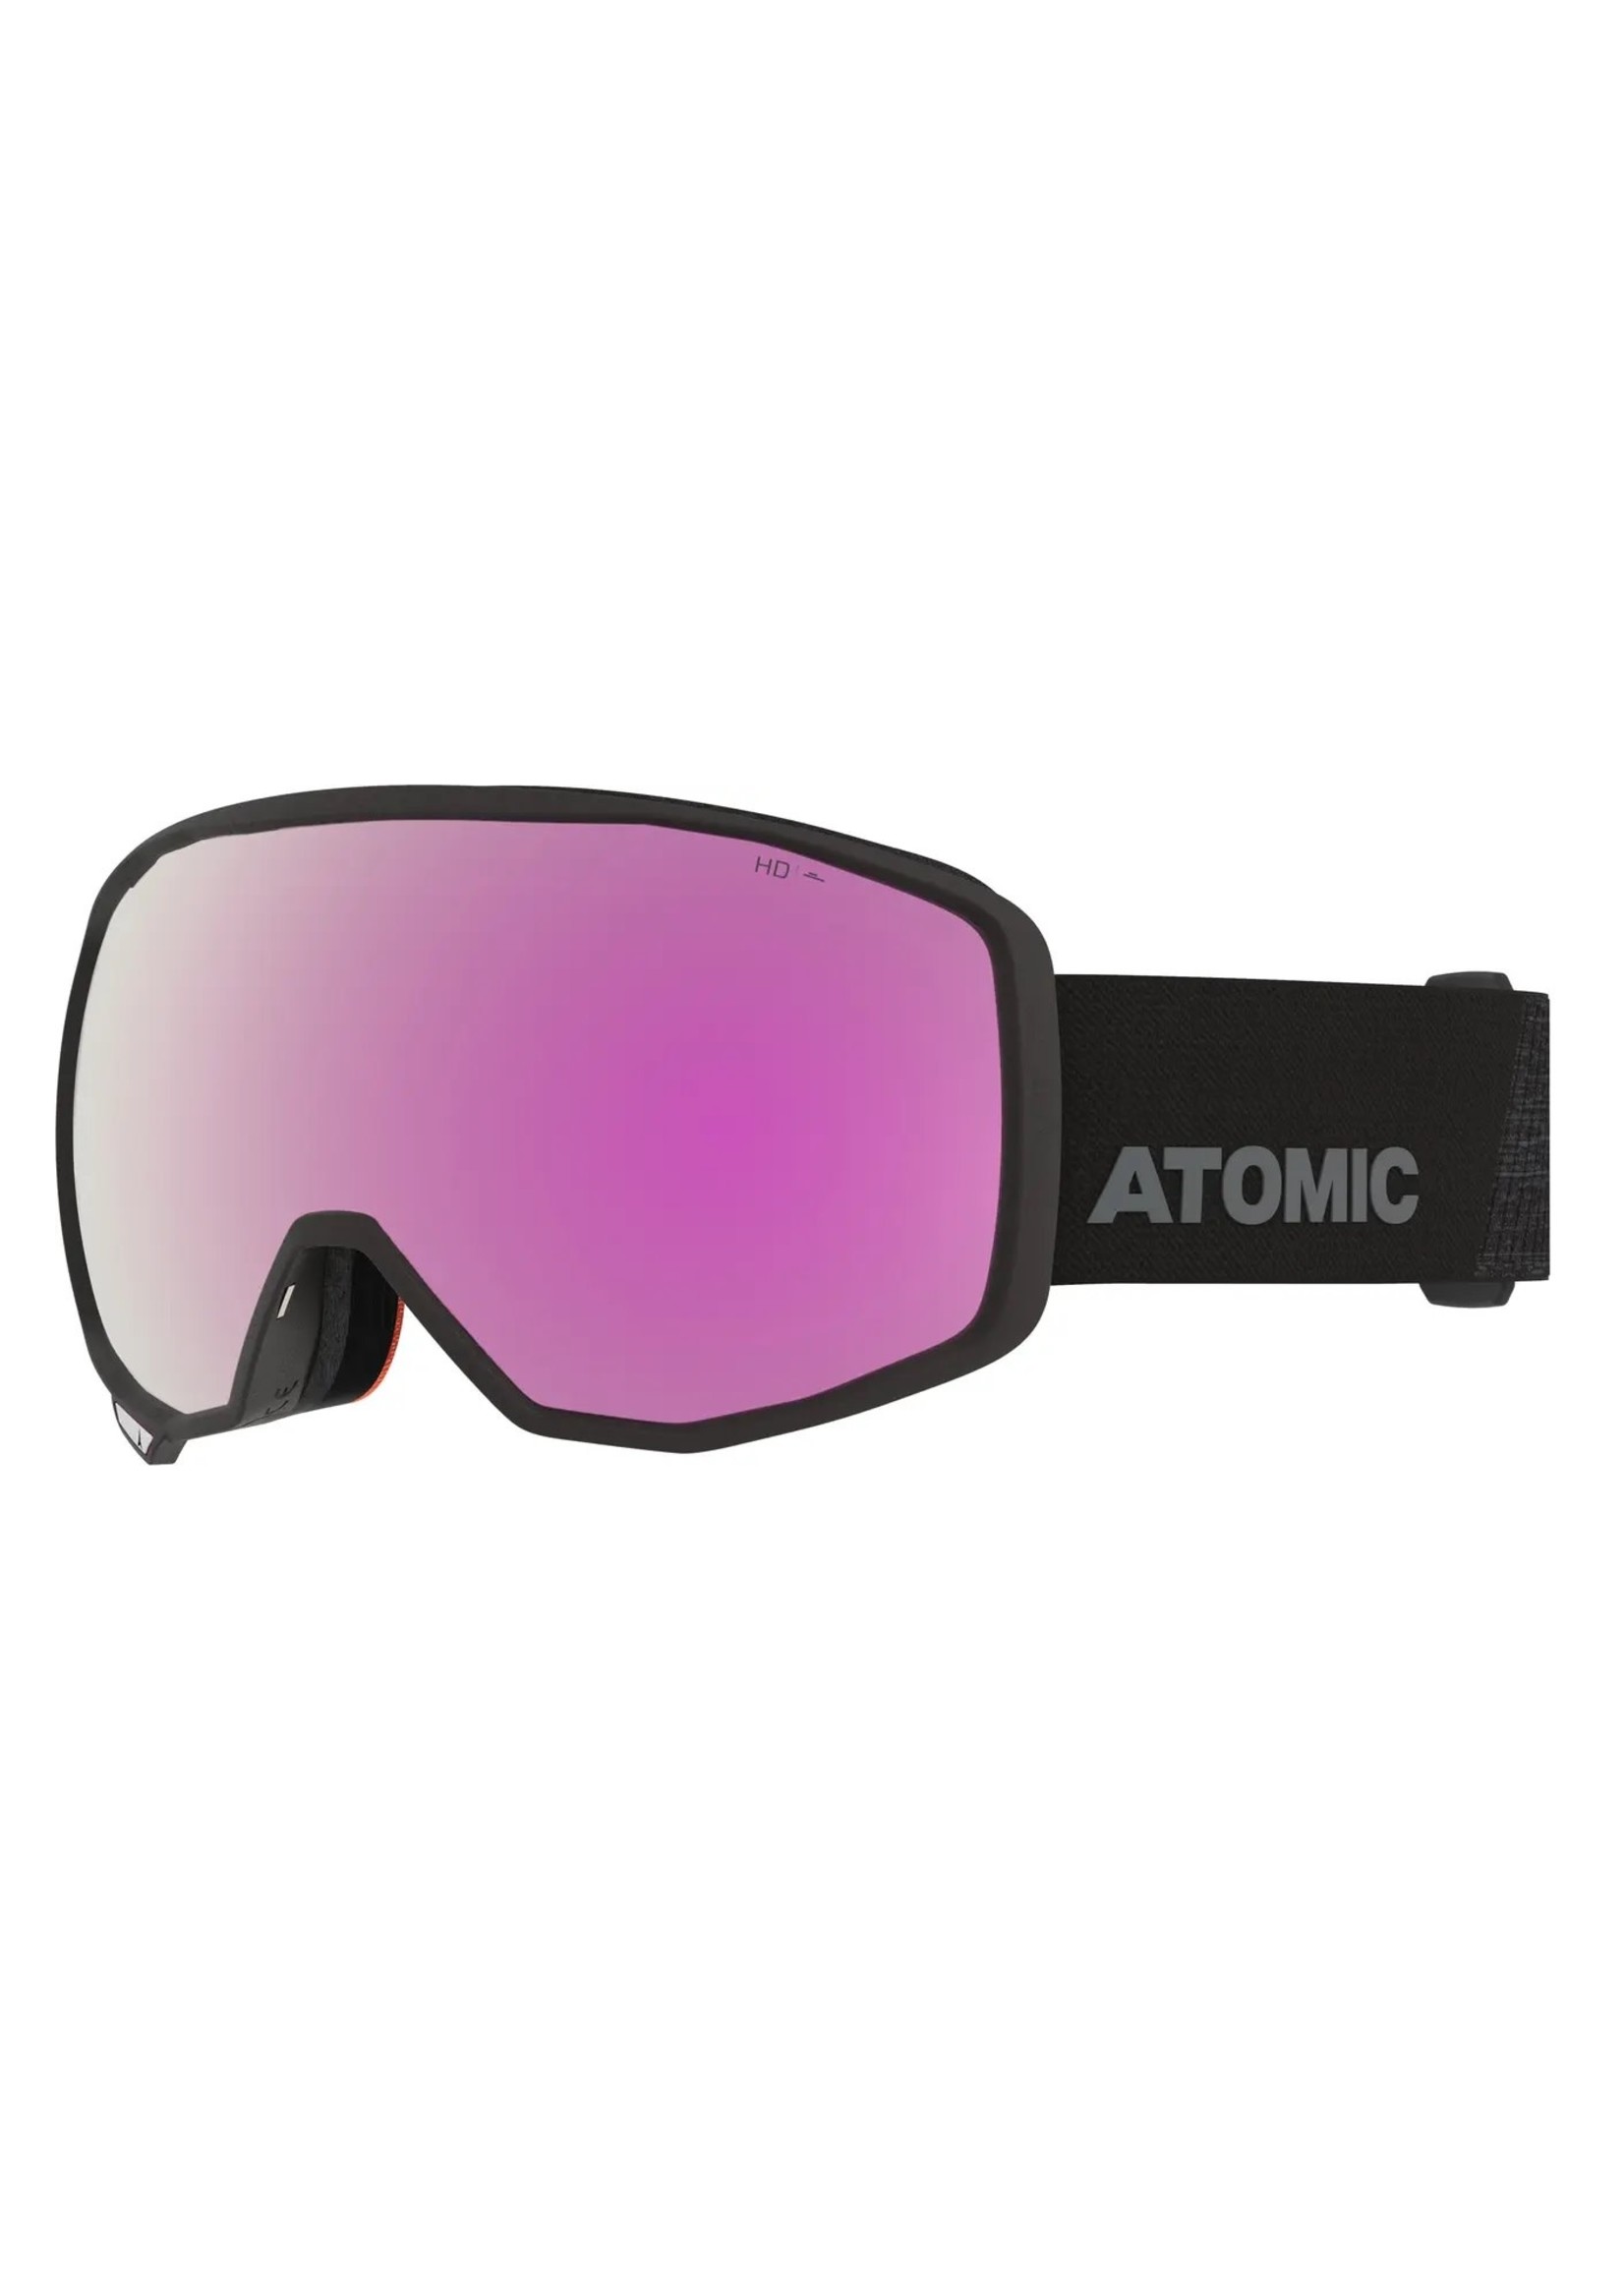 Atomic Atomic Count HD Goggle